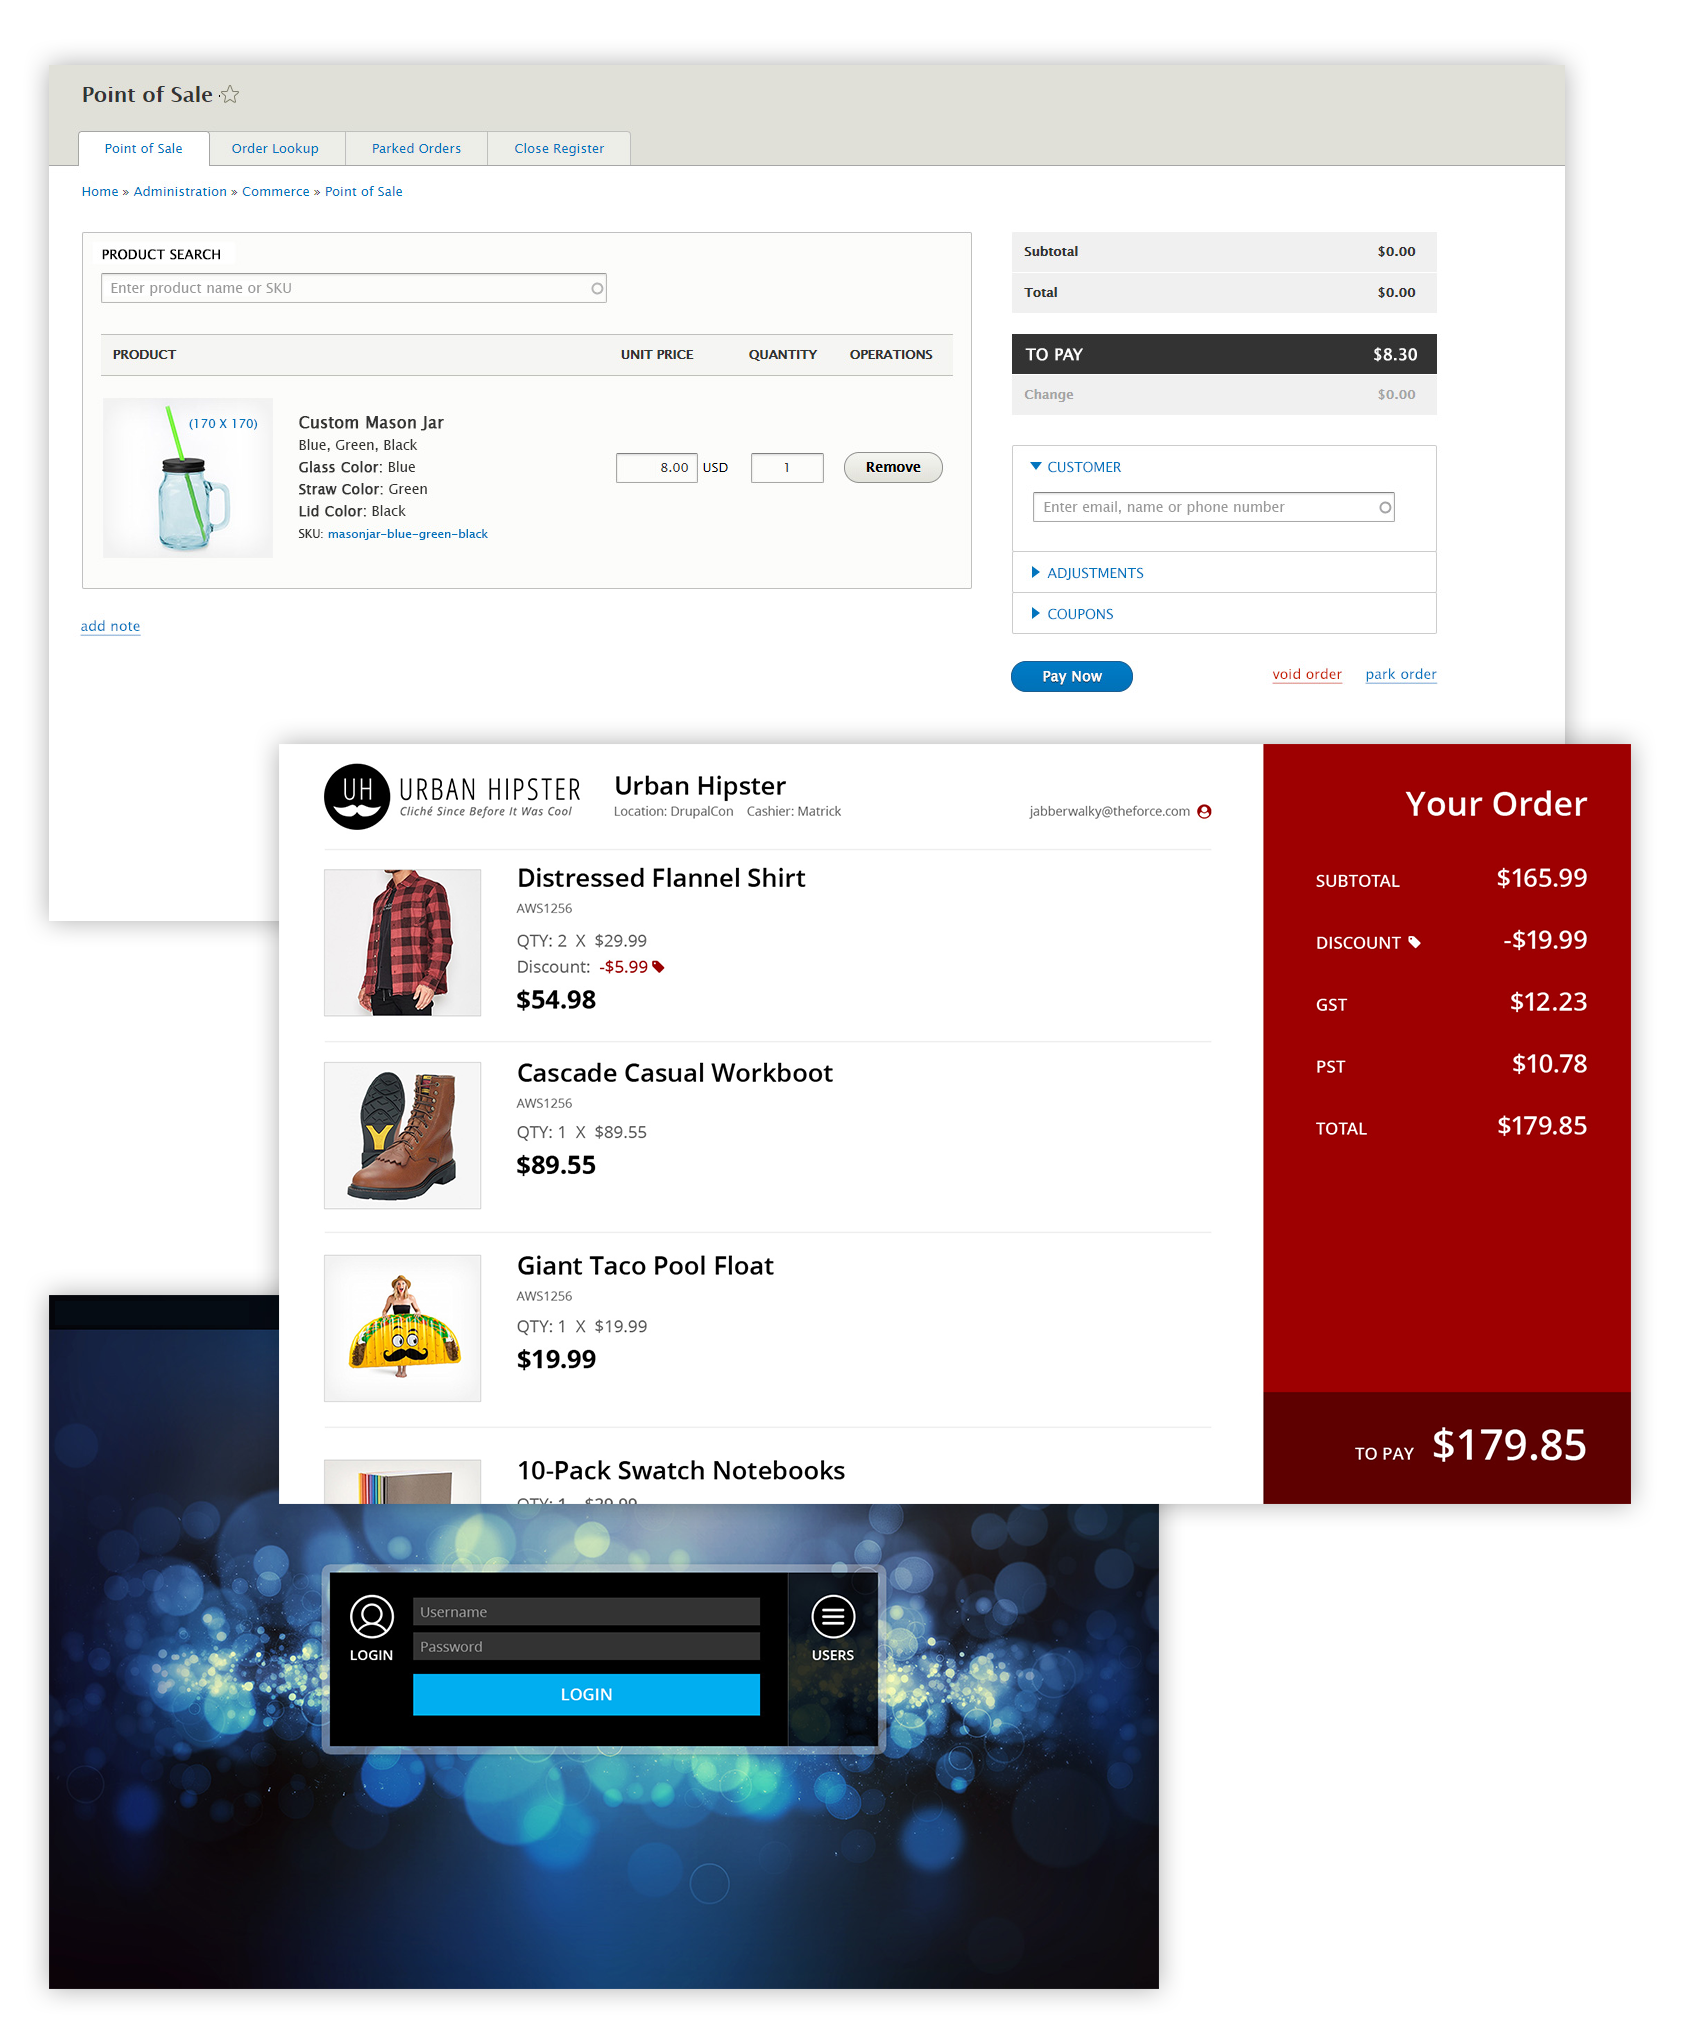 Commerce Point of Sale Screenshots